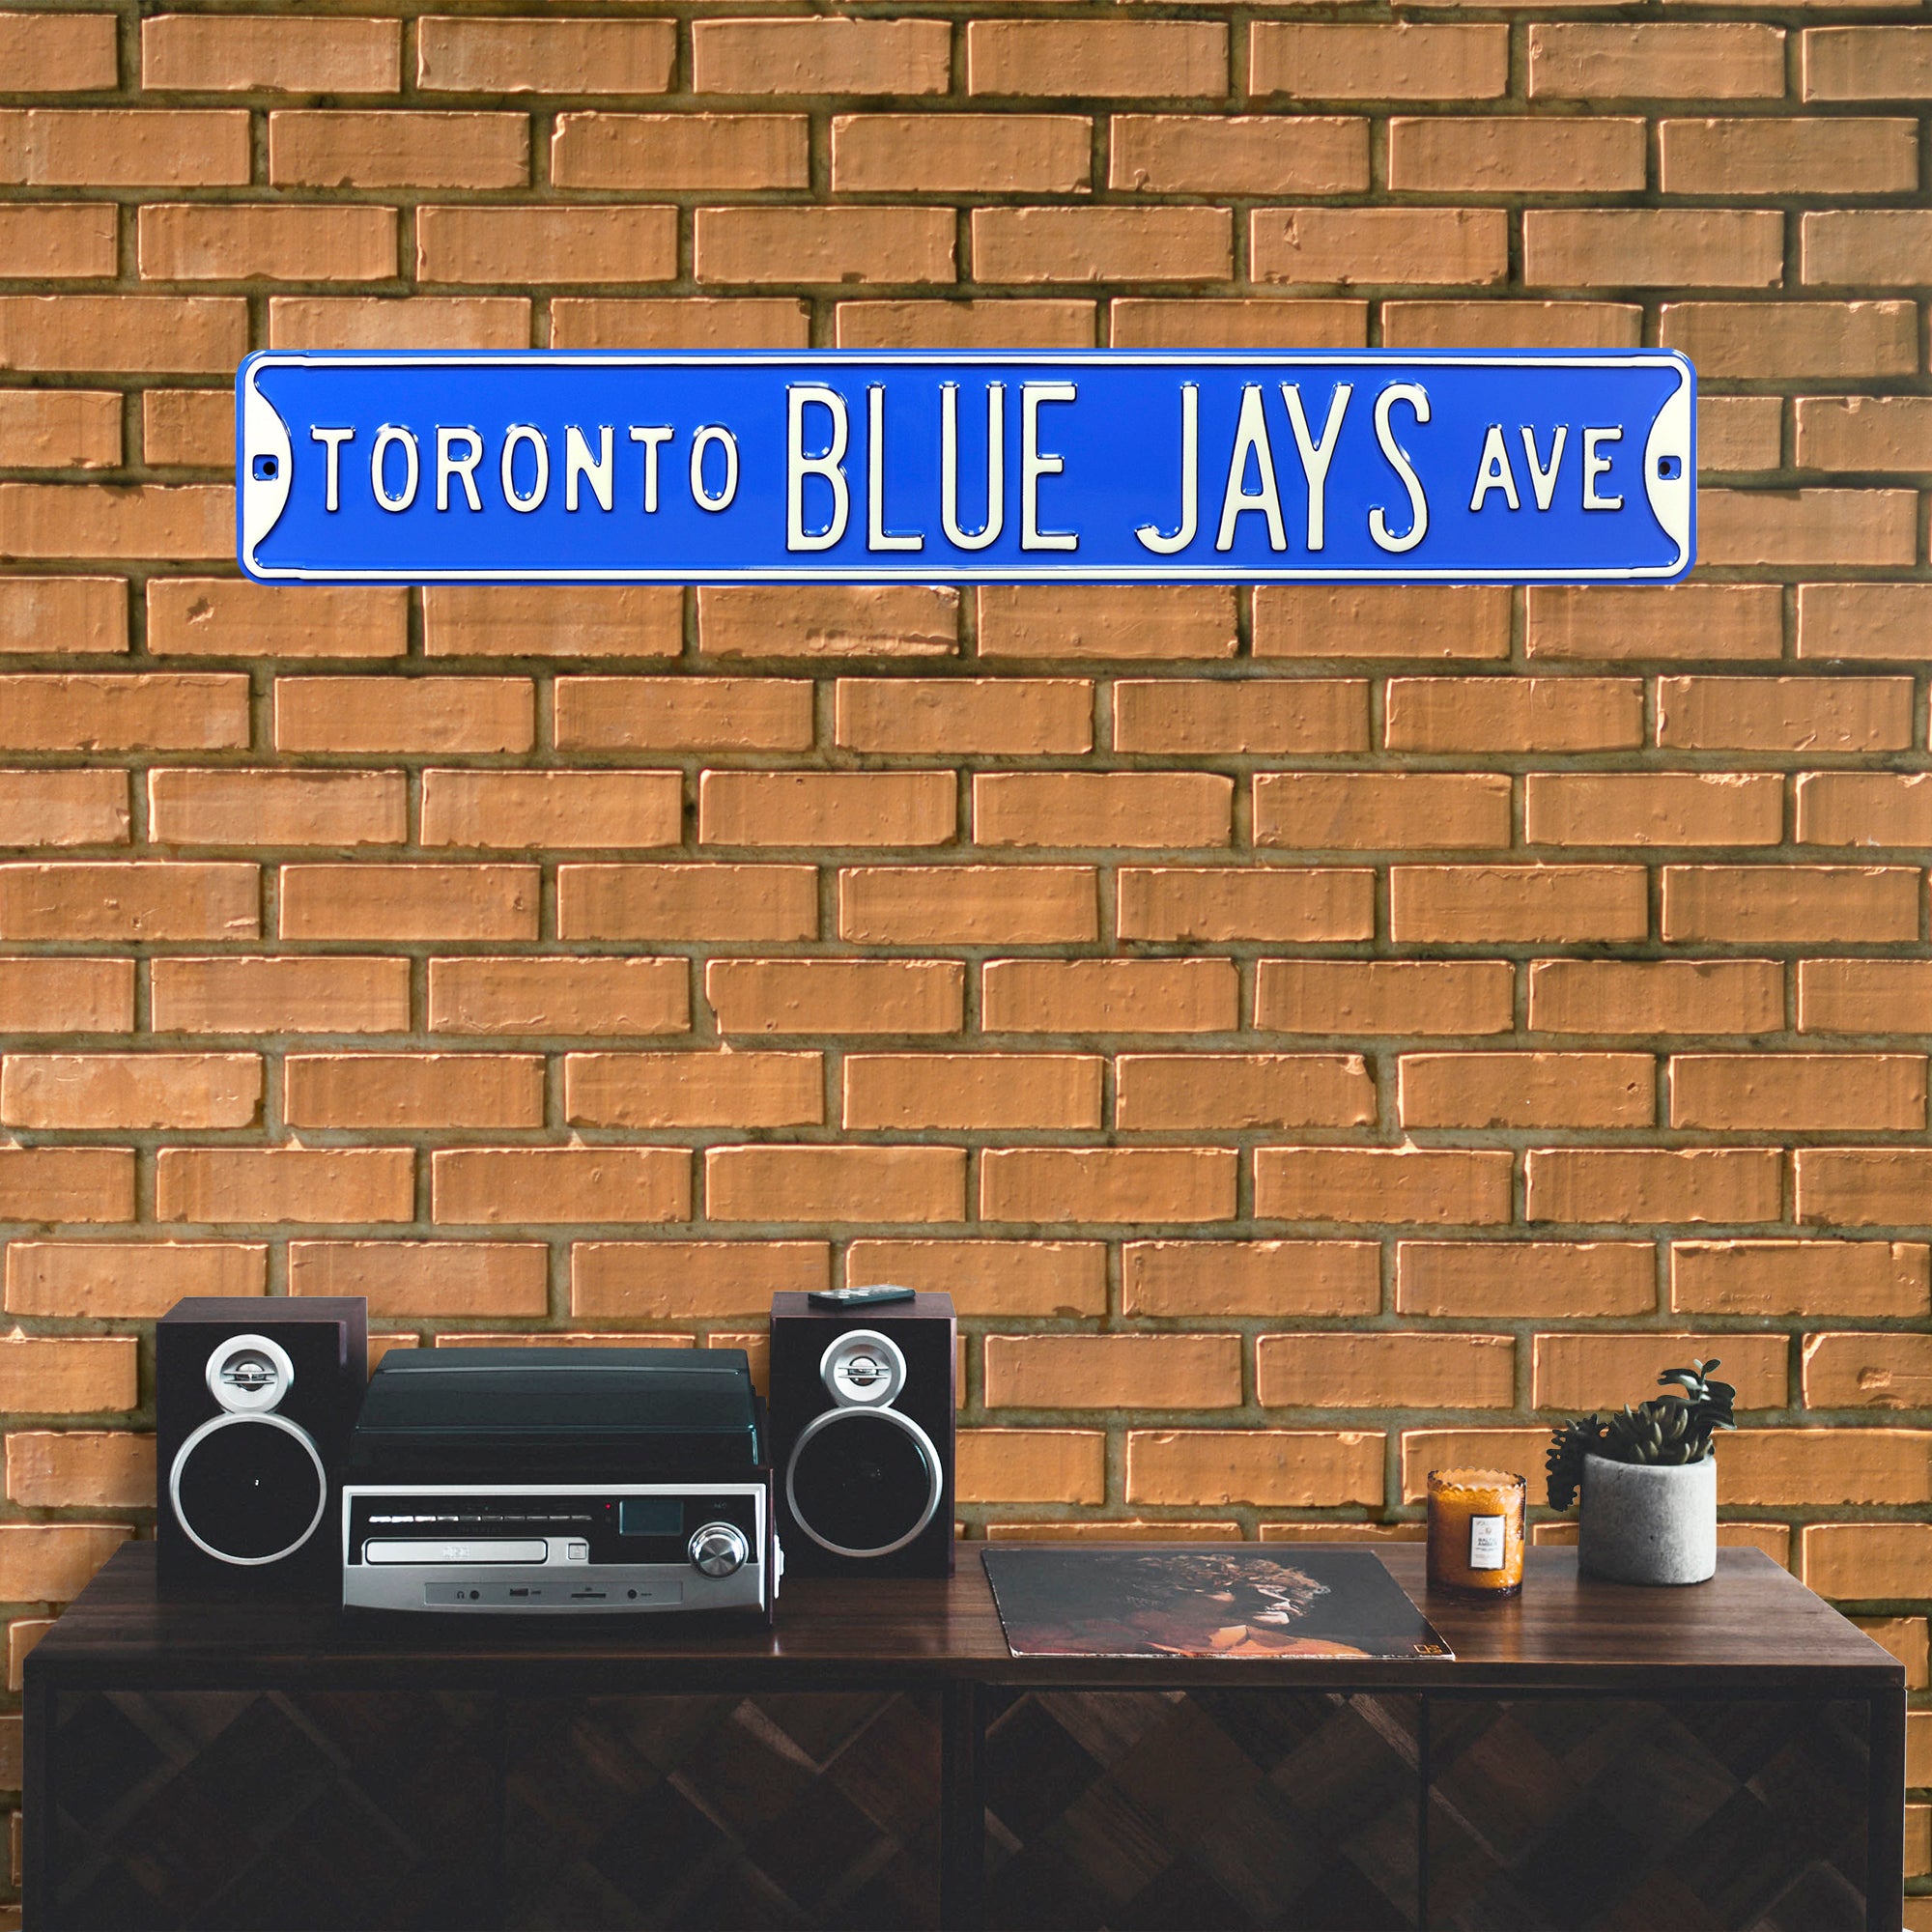 Toronto Blue Jays Steel Street Sign-TORONTO BLUE JAYS AVE 36" W x 6" H by Fathead